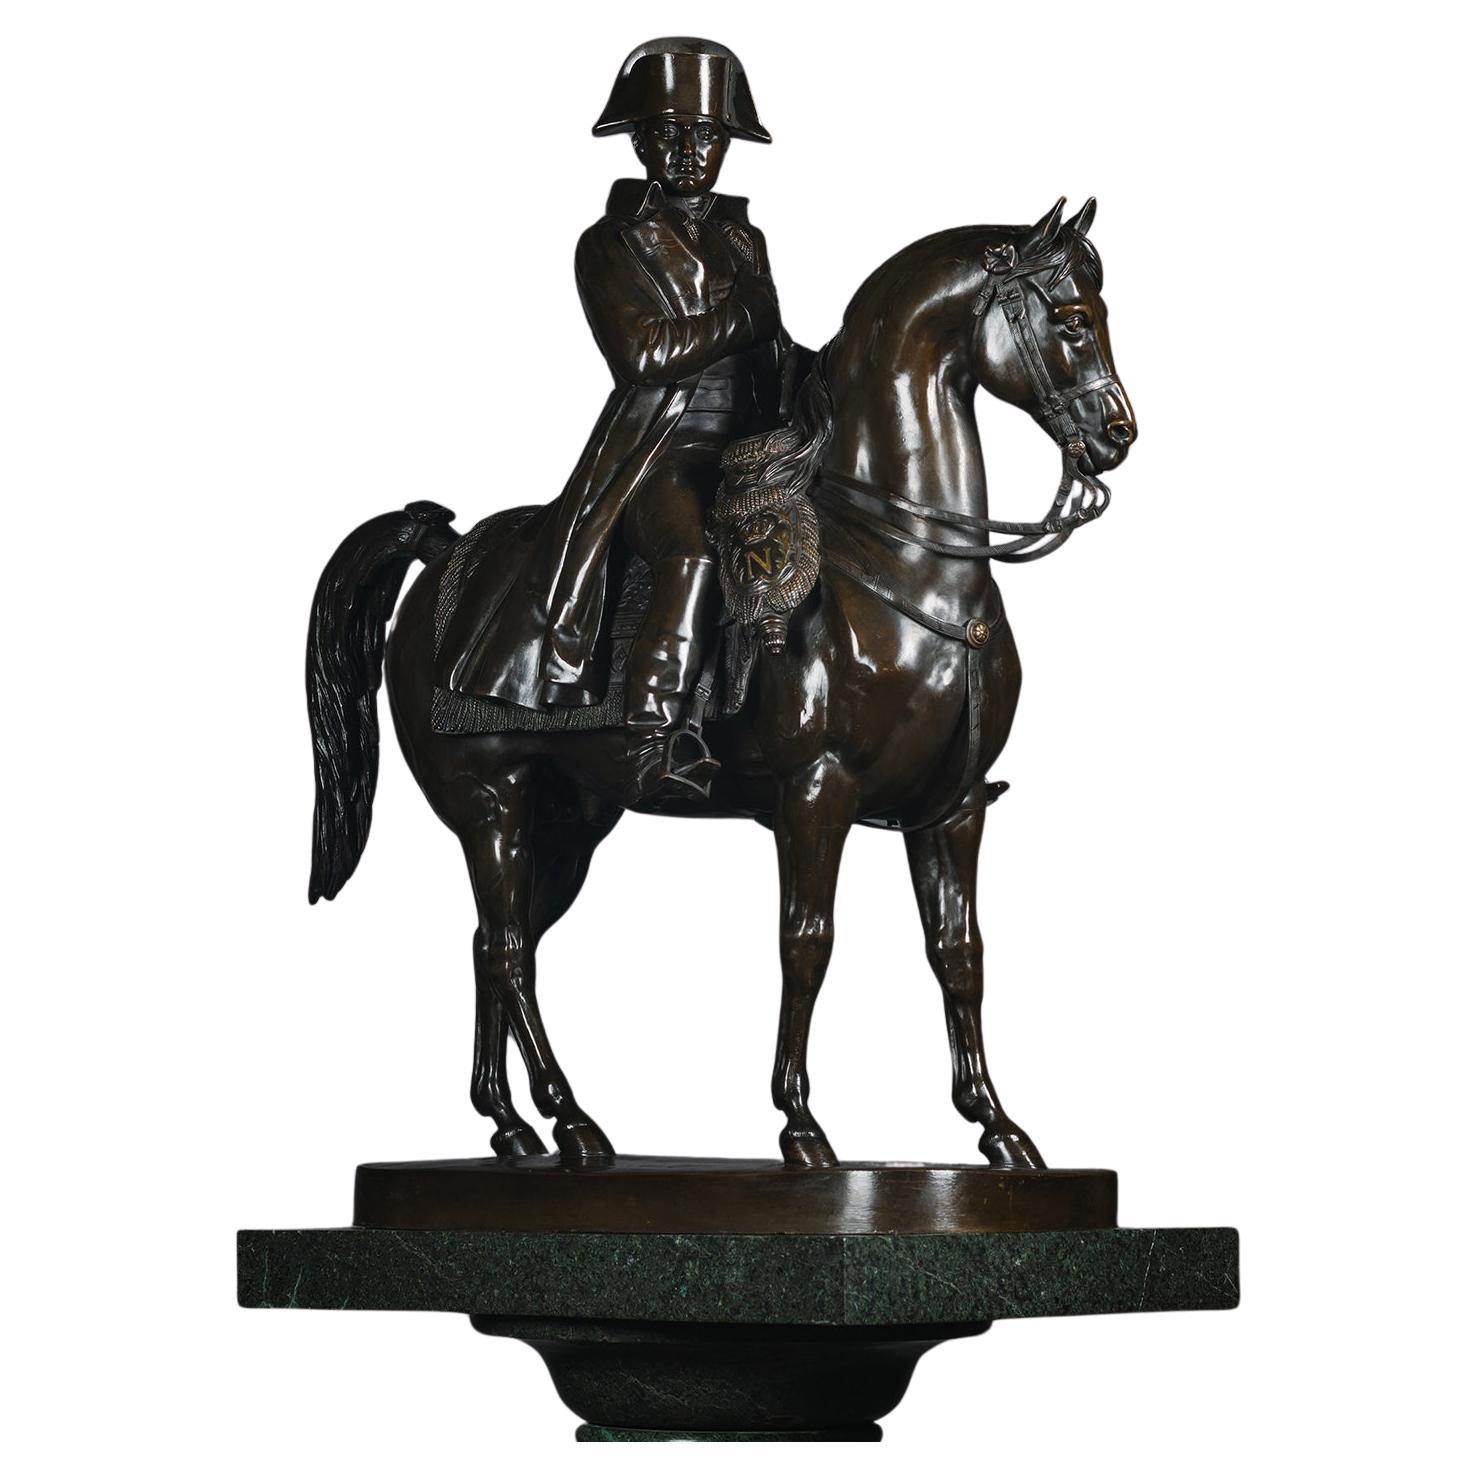 Emperor Napoleon on Horseback, Cast by Susse Frères, Paris